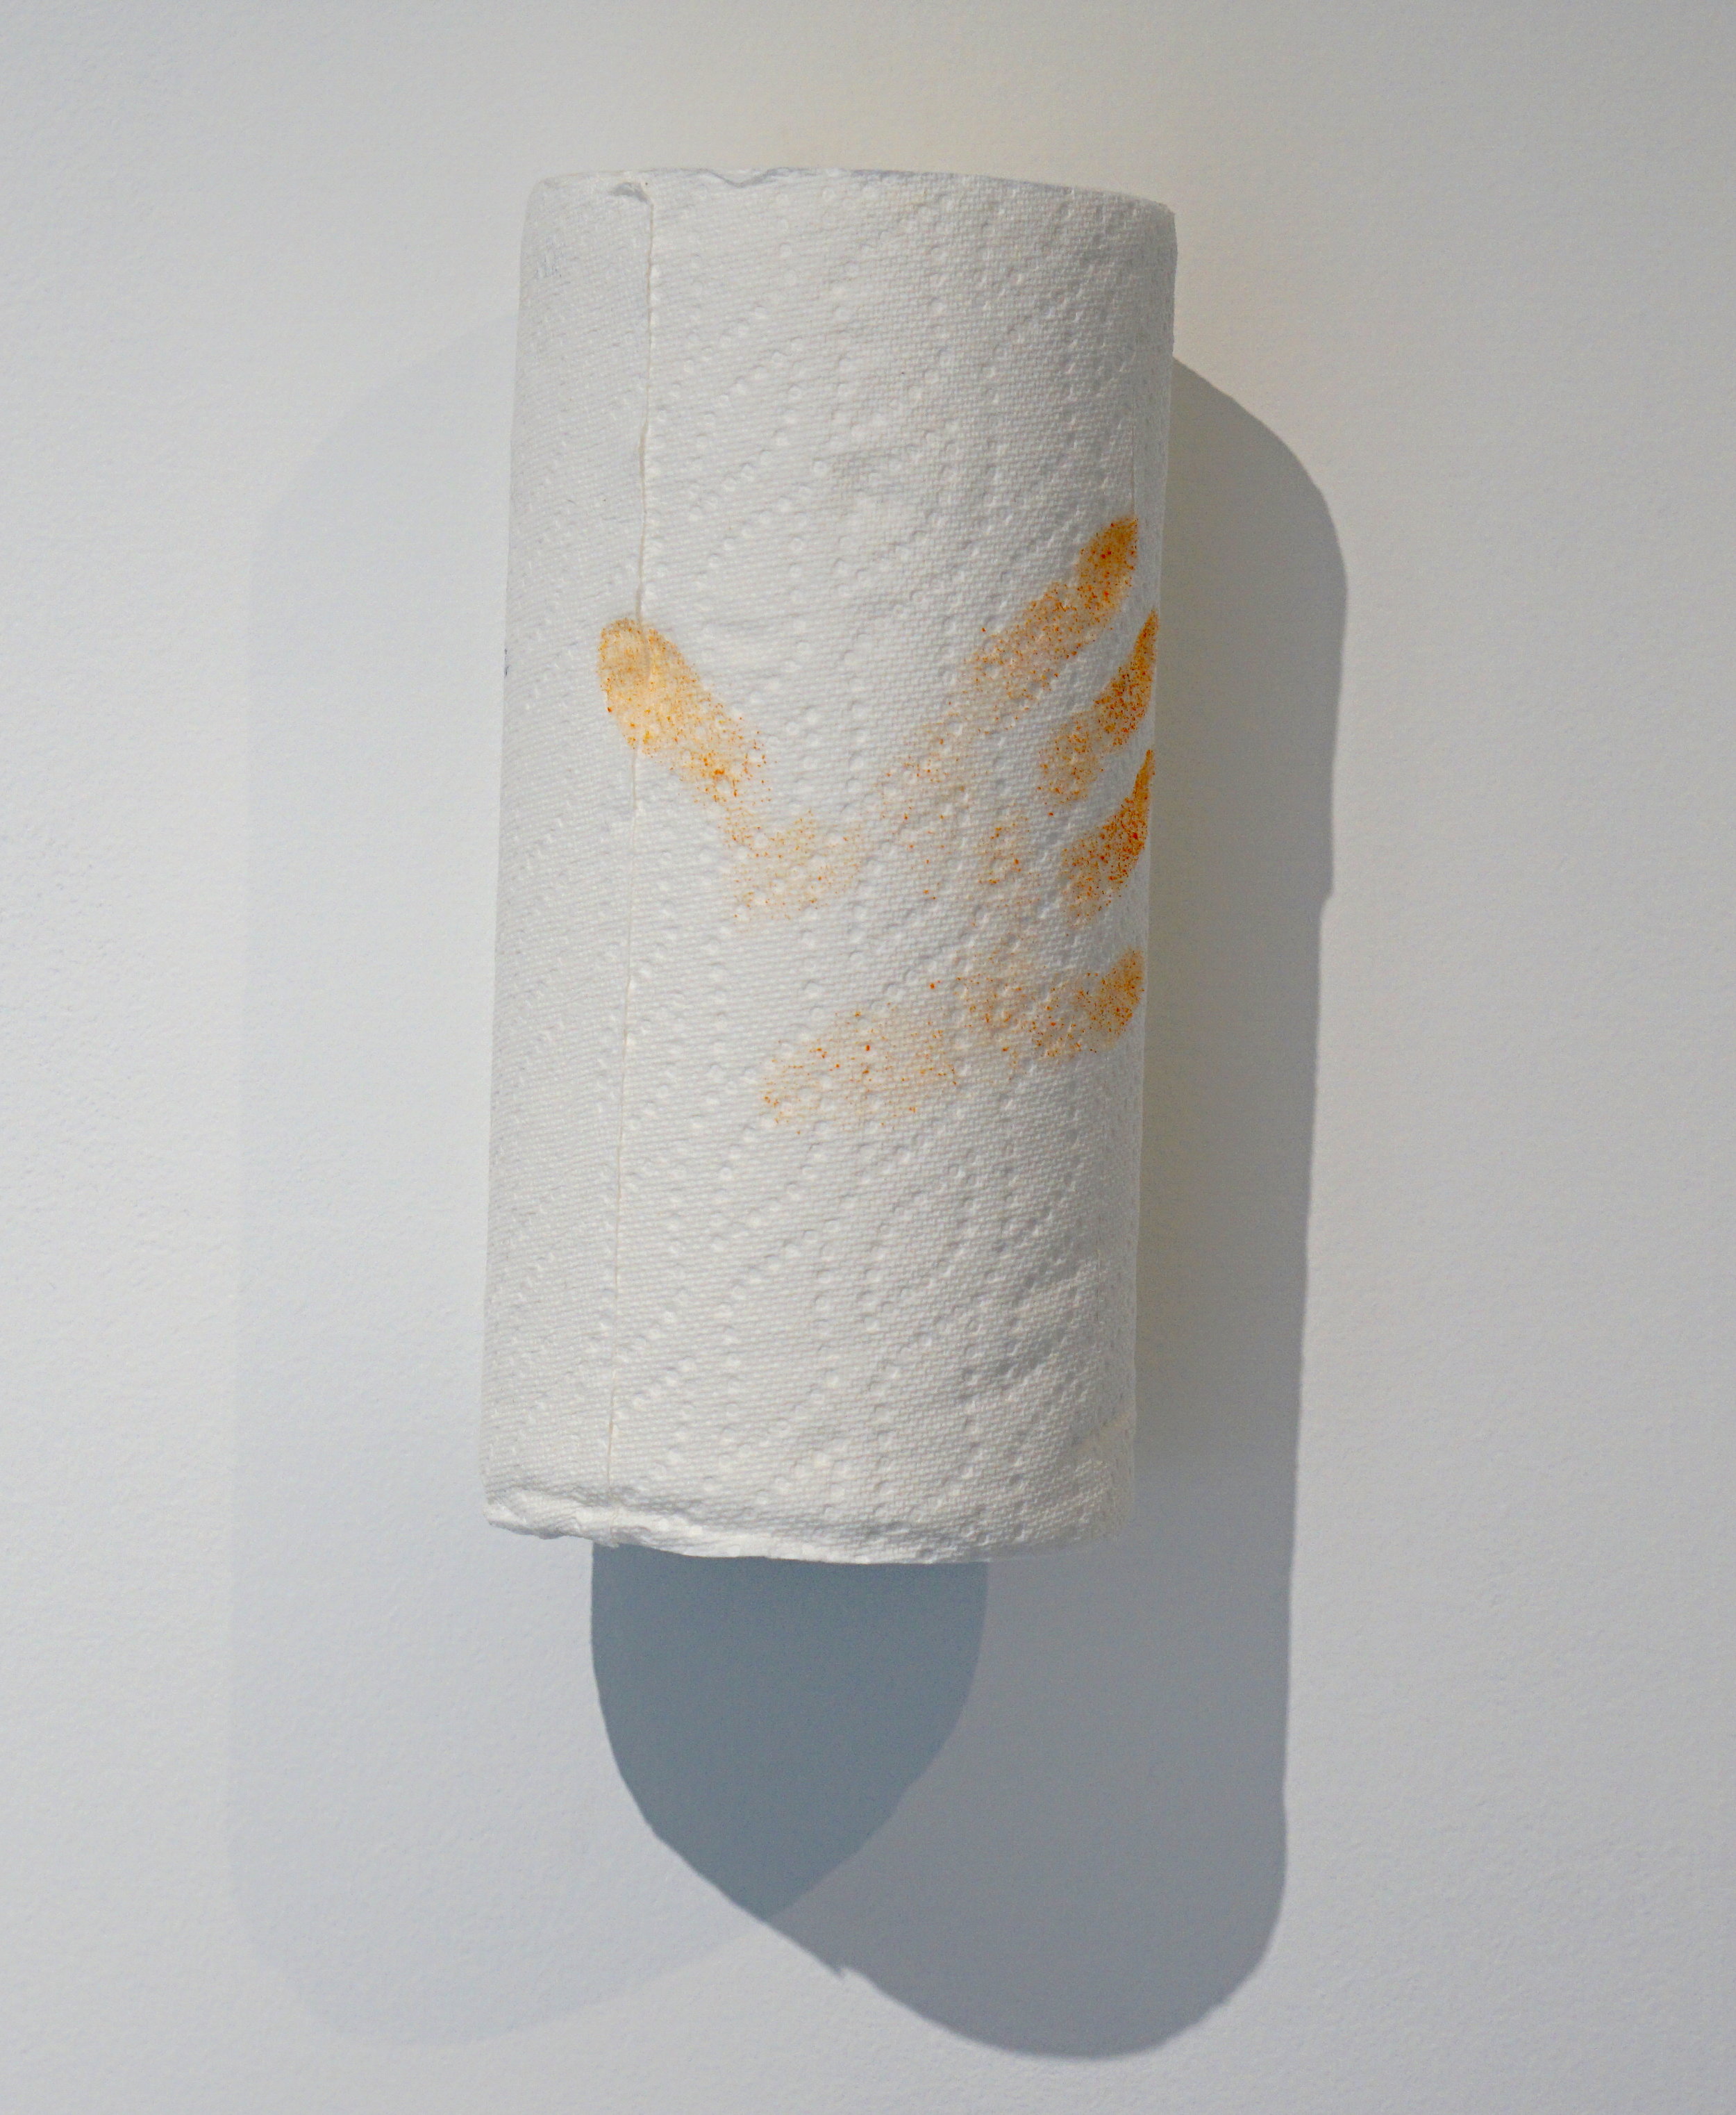   Frances Gallardo   Untitled , 2017 Cheeto powder, paper towels 